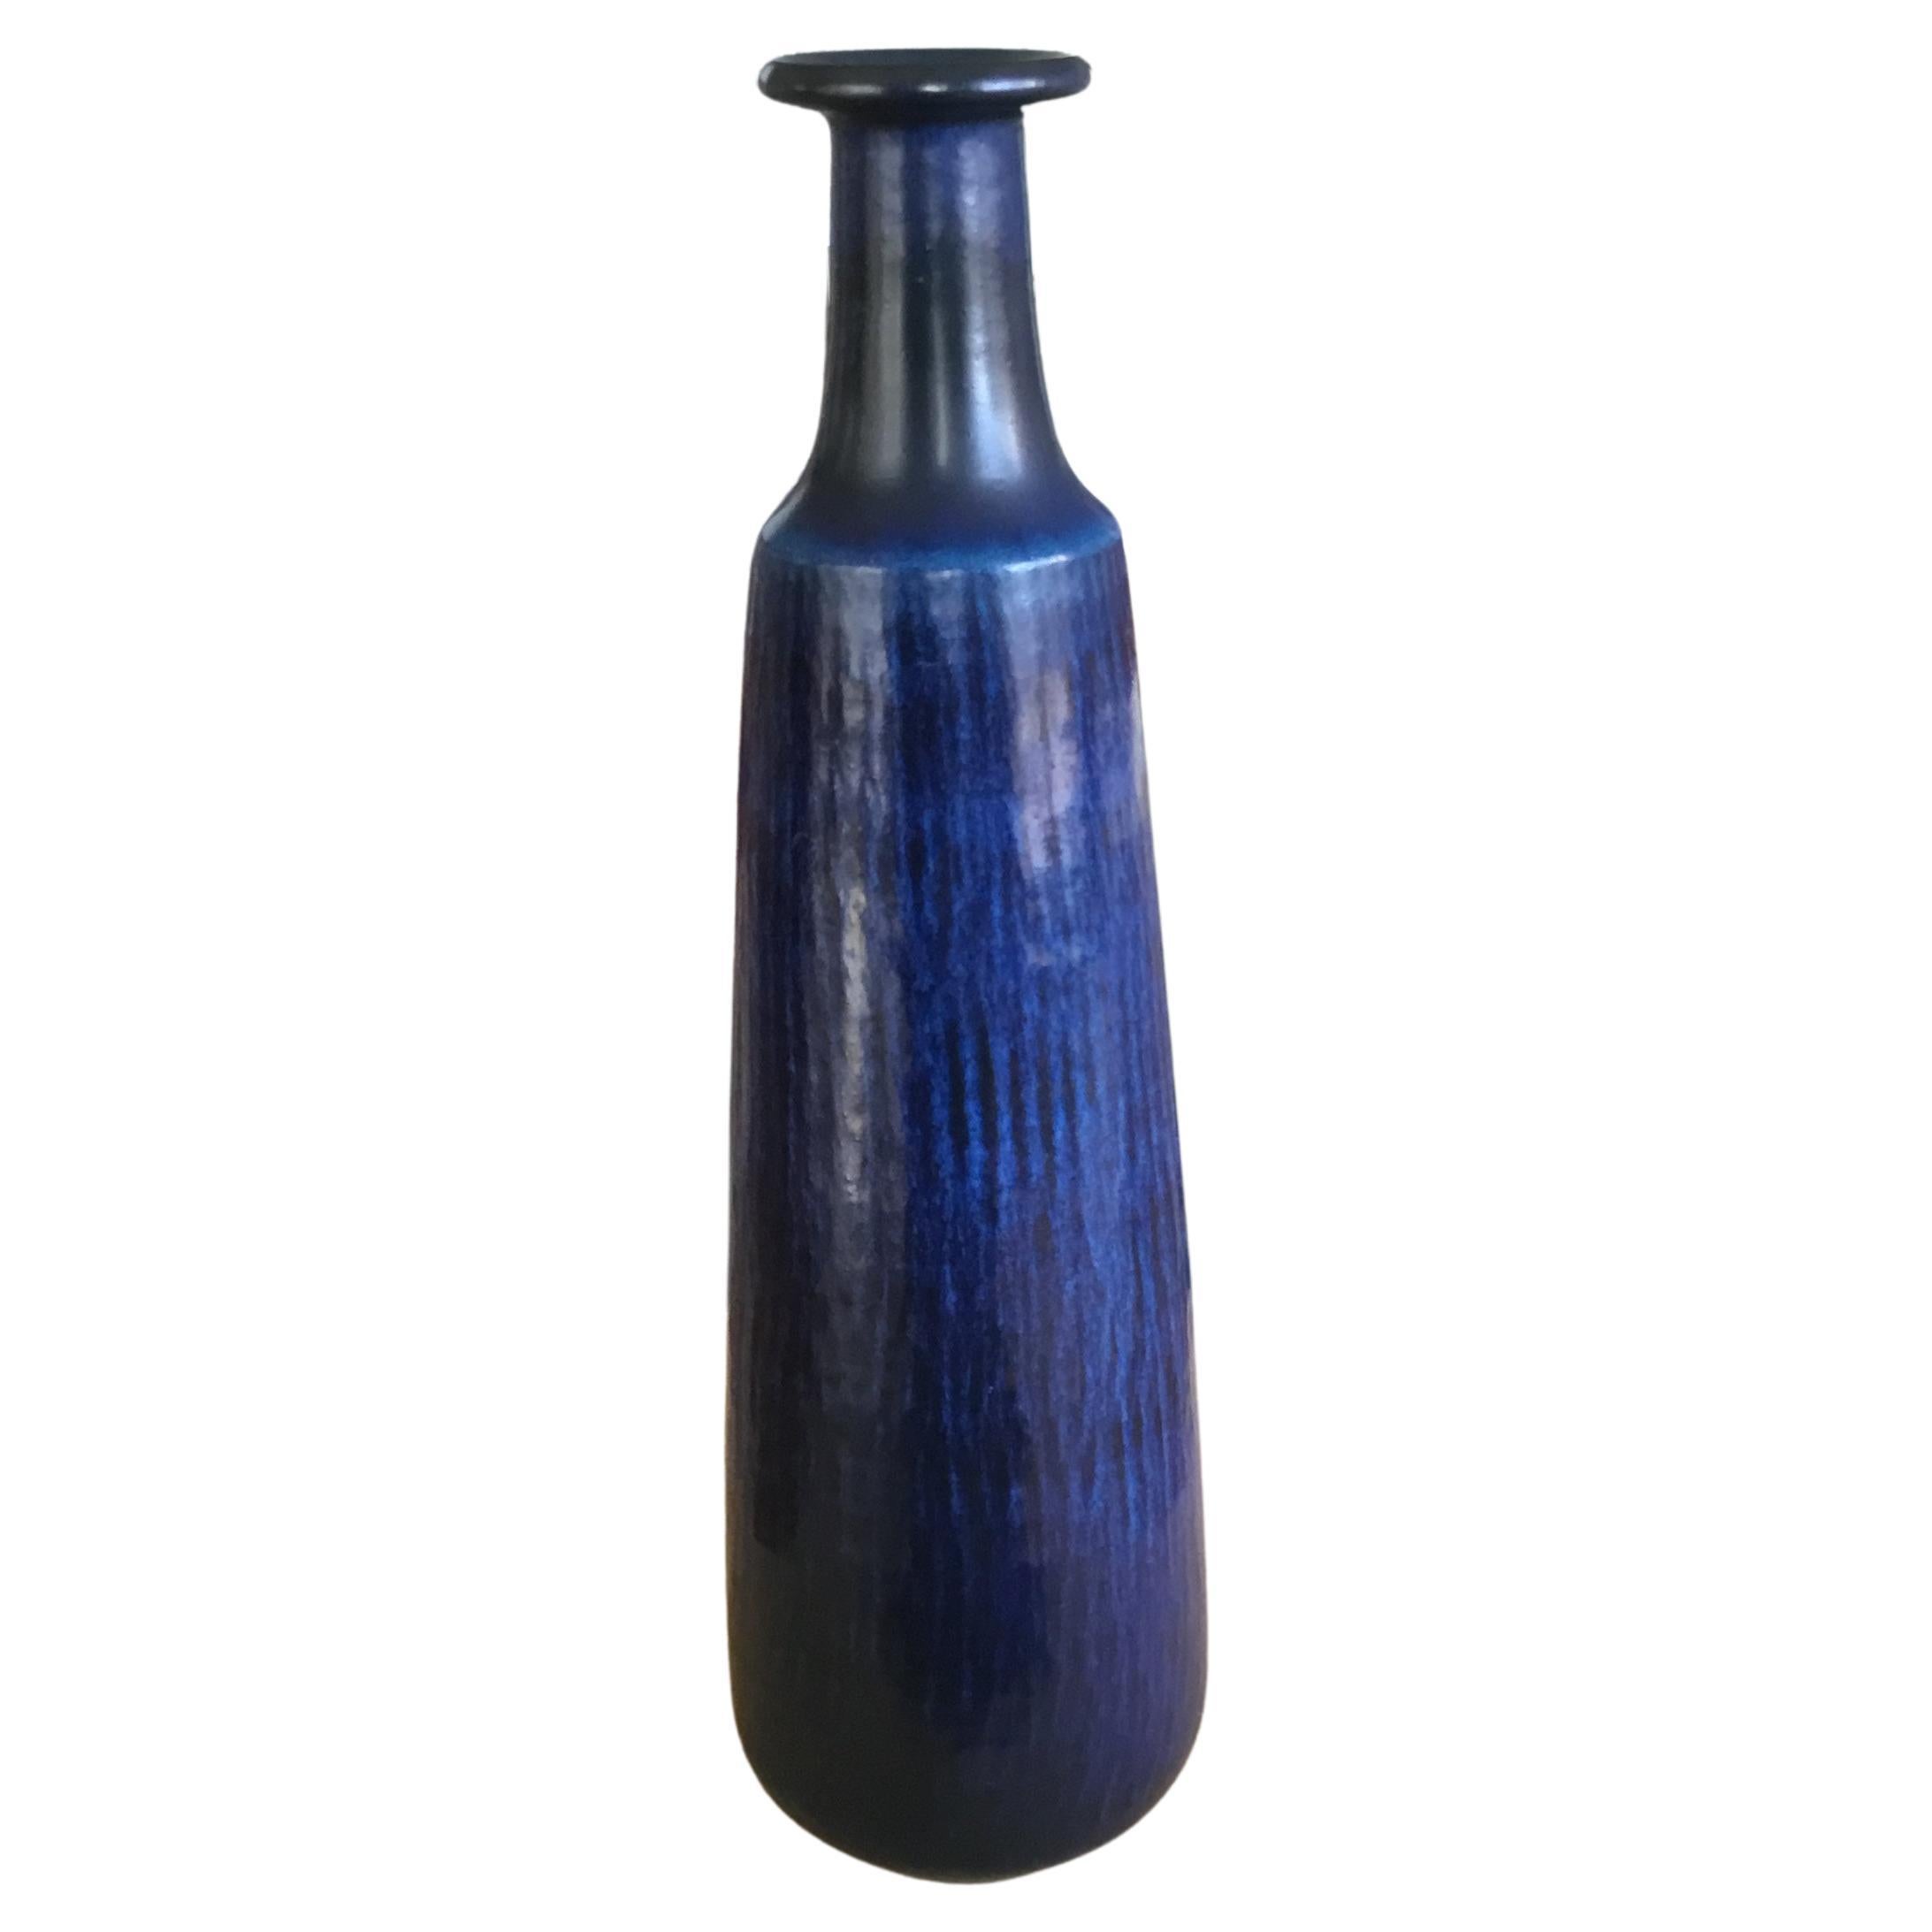 Very Tall Gunnar Nylund Vase by Nymølle with Dark Blue Glaze 1960s For Sale 2